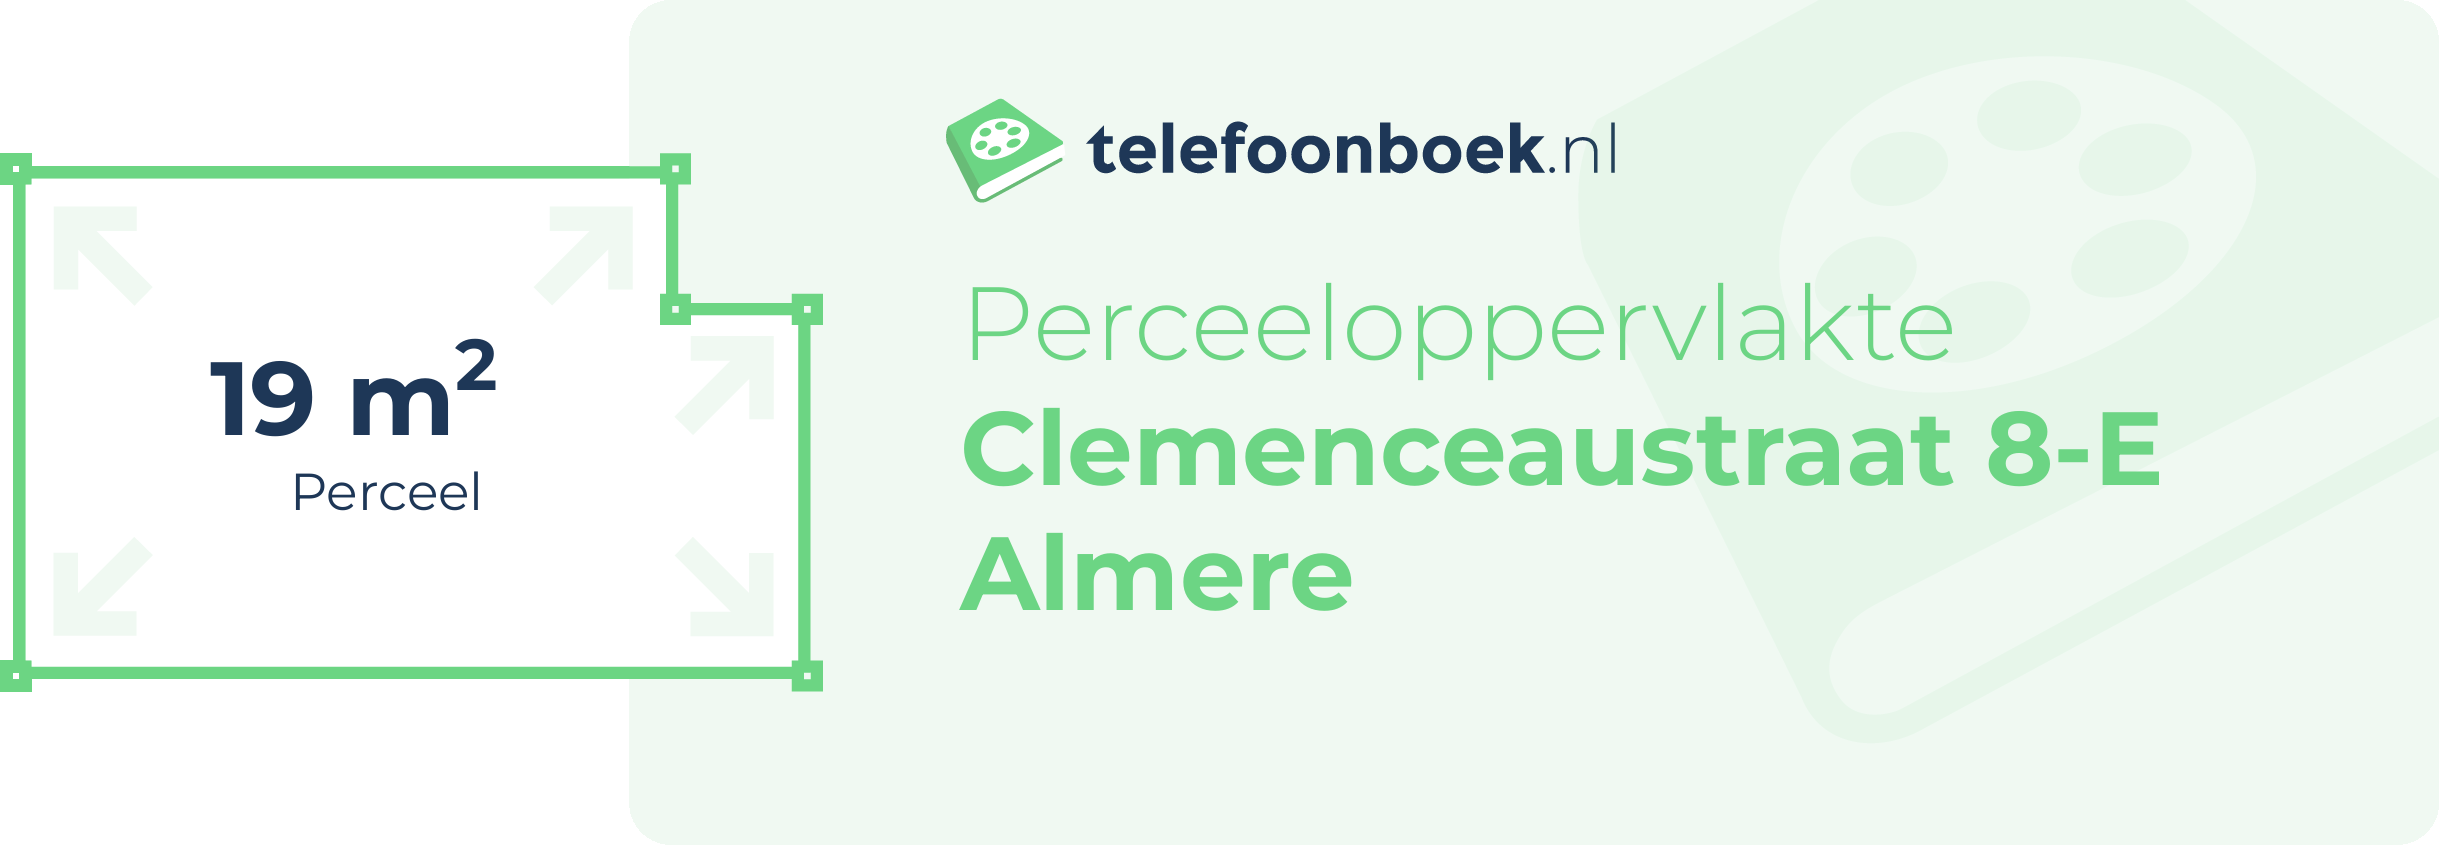 Perceeloppervlakte Clemenceaustraat 8-E Almere